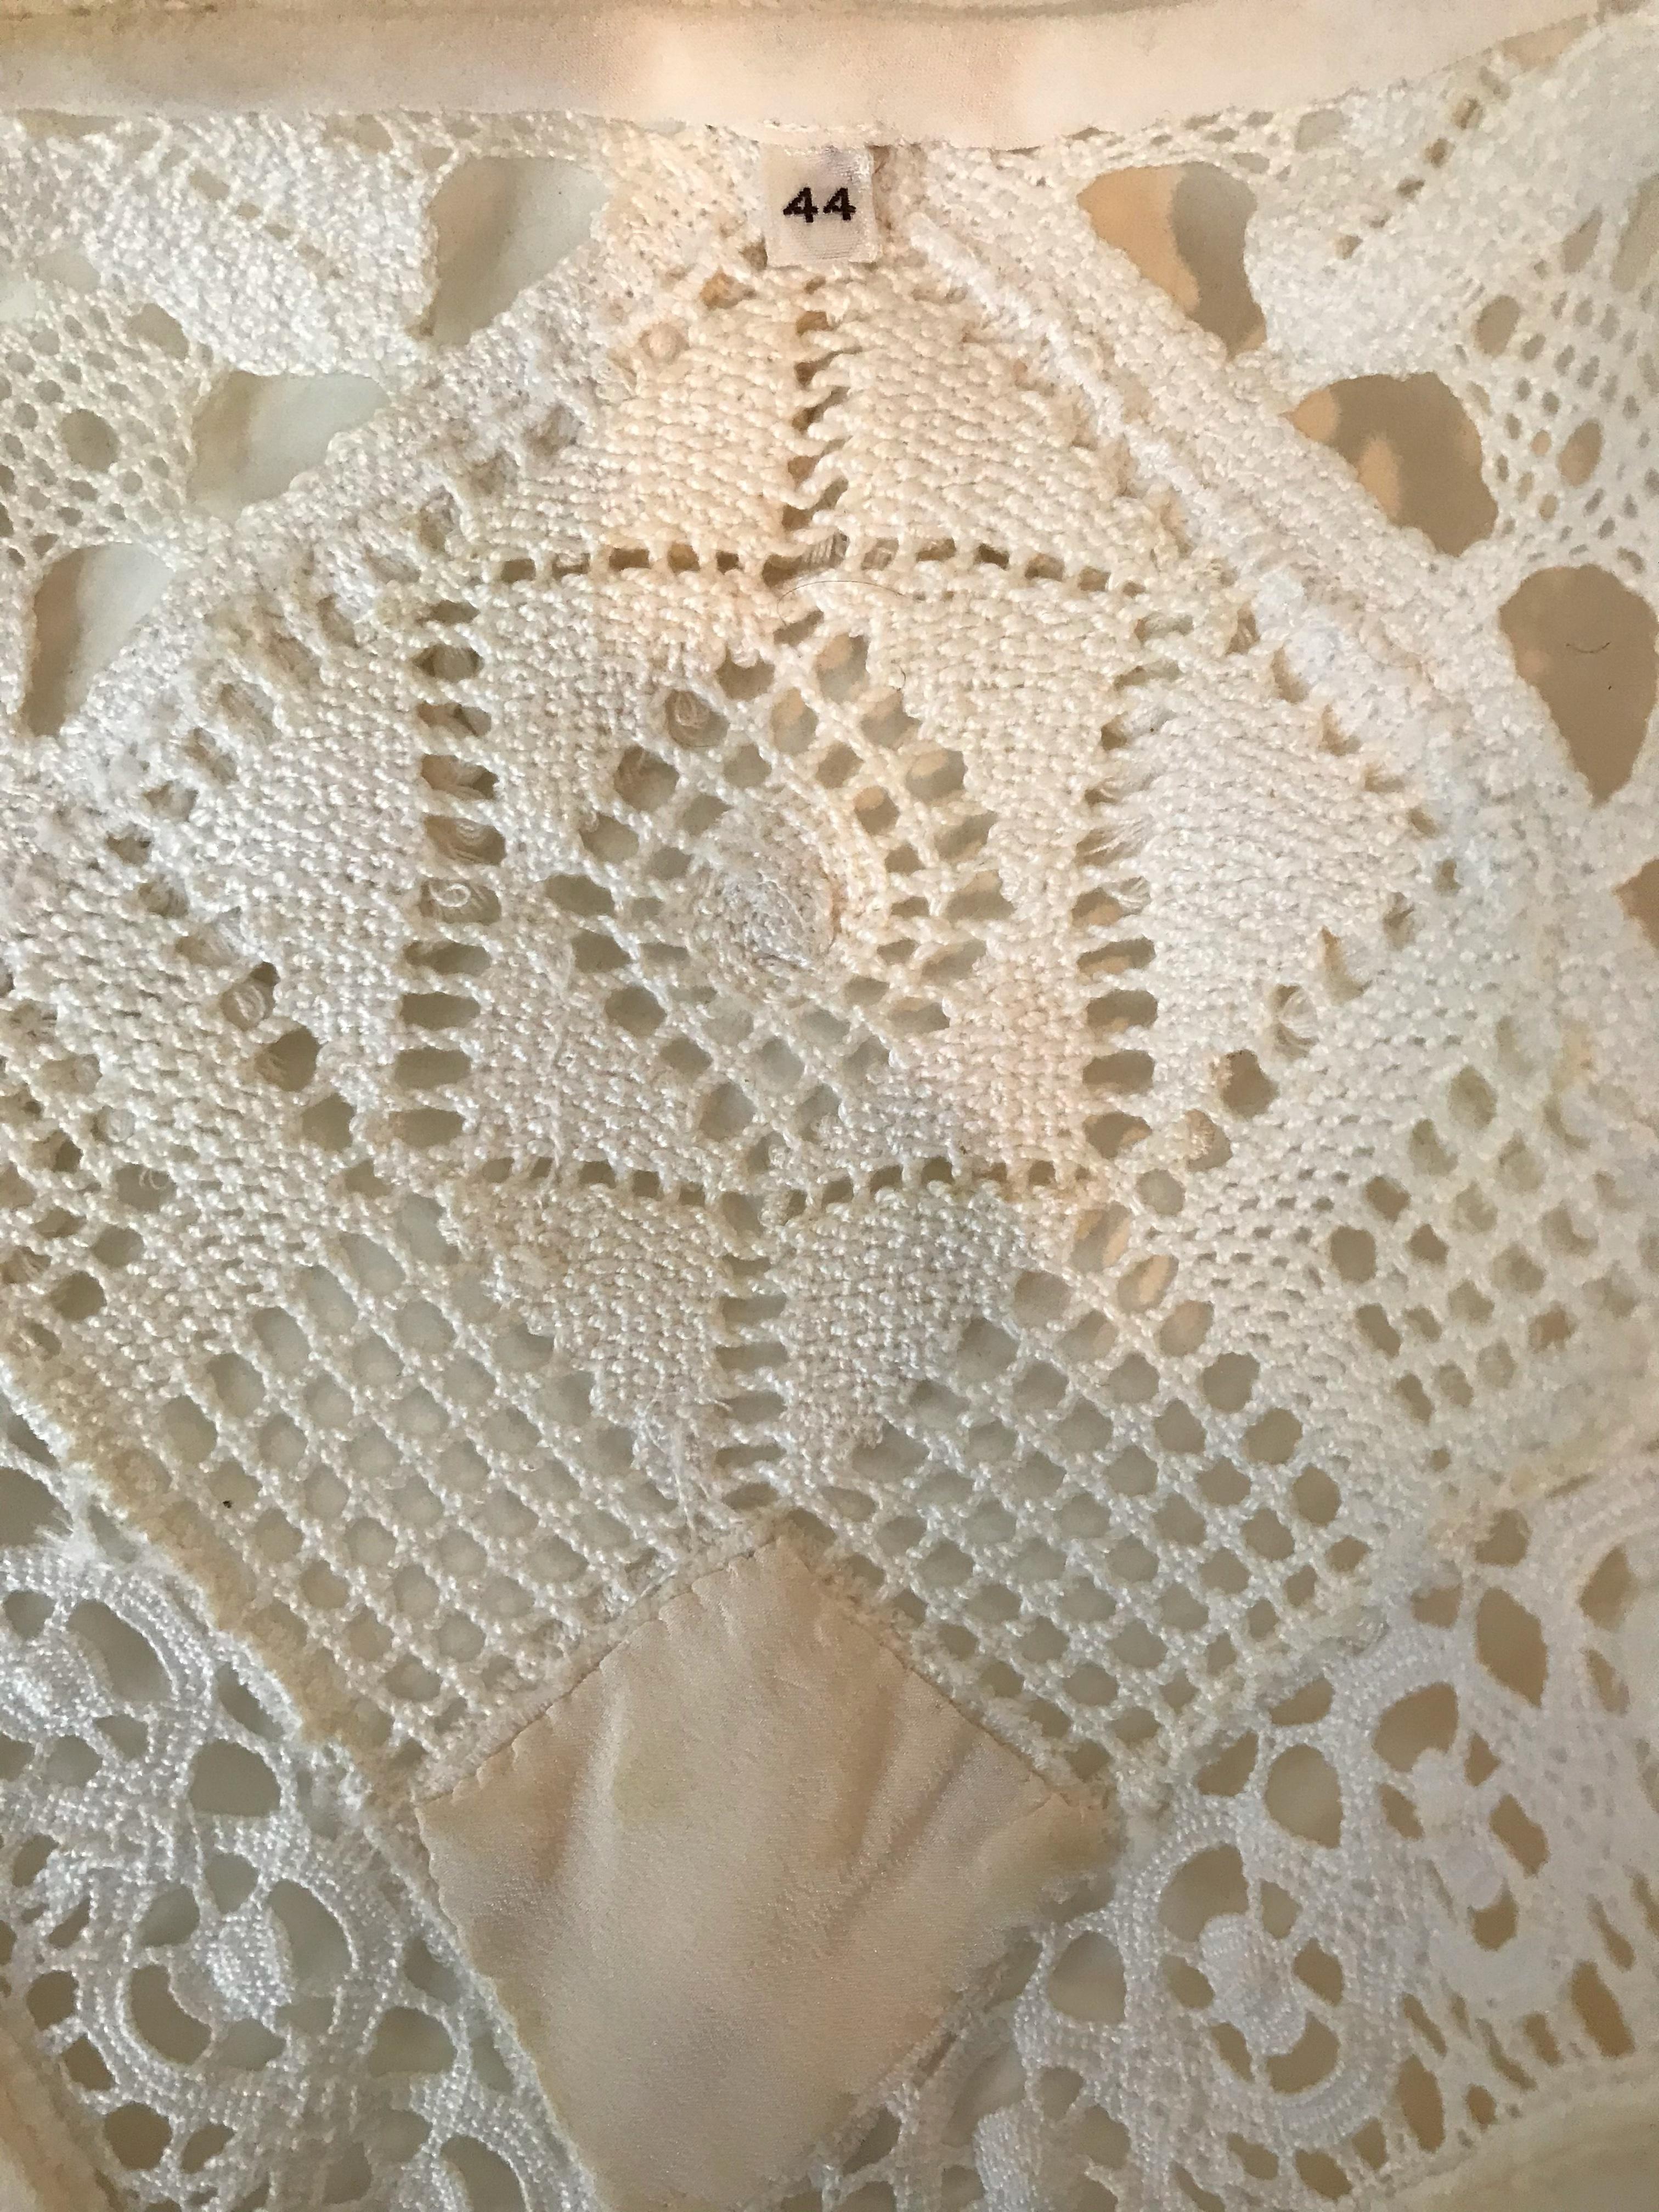 Gianfranco Ferre Brocade Crochet Lace & Pom Pom Detail Jacket and Skirt Ensemble For Sale 10